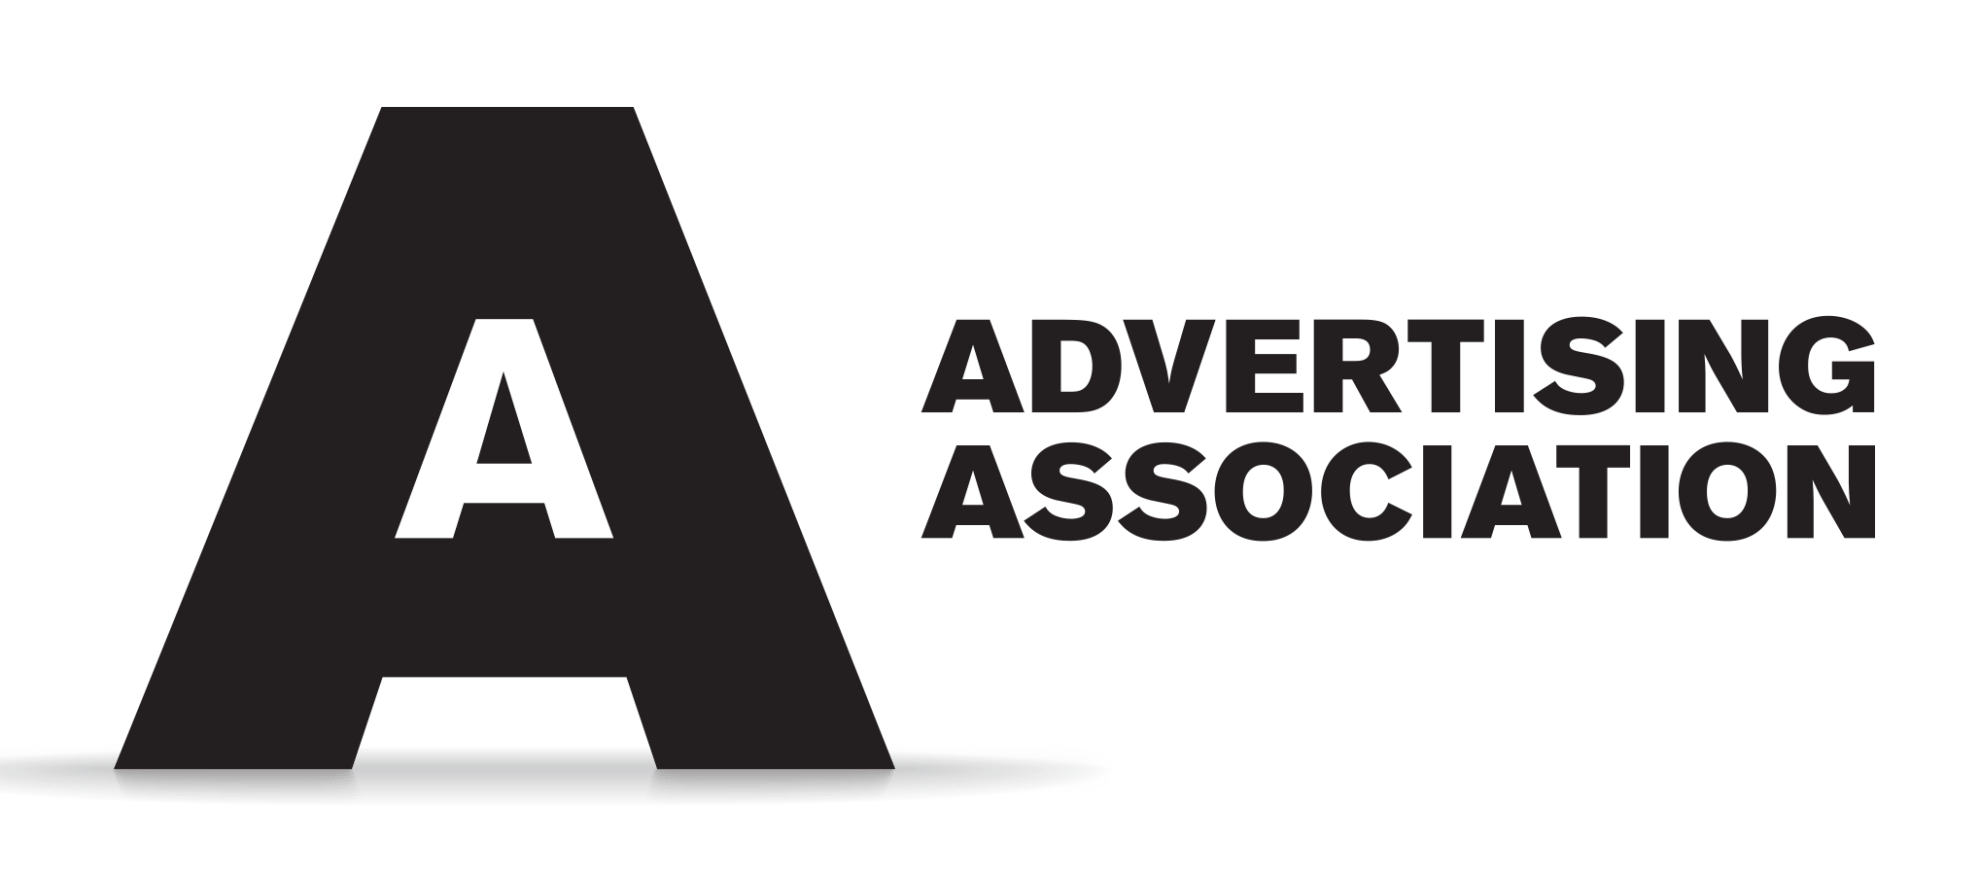 Advertisin Association Case Study - Markettiers - broadcast specialist creative agency 1